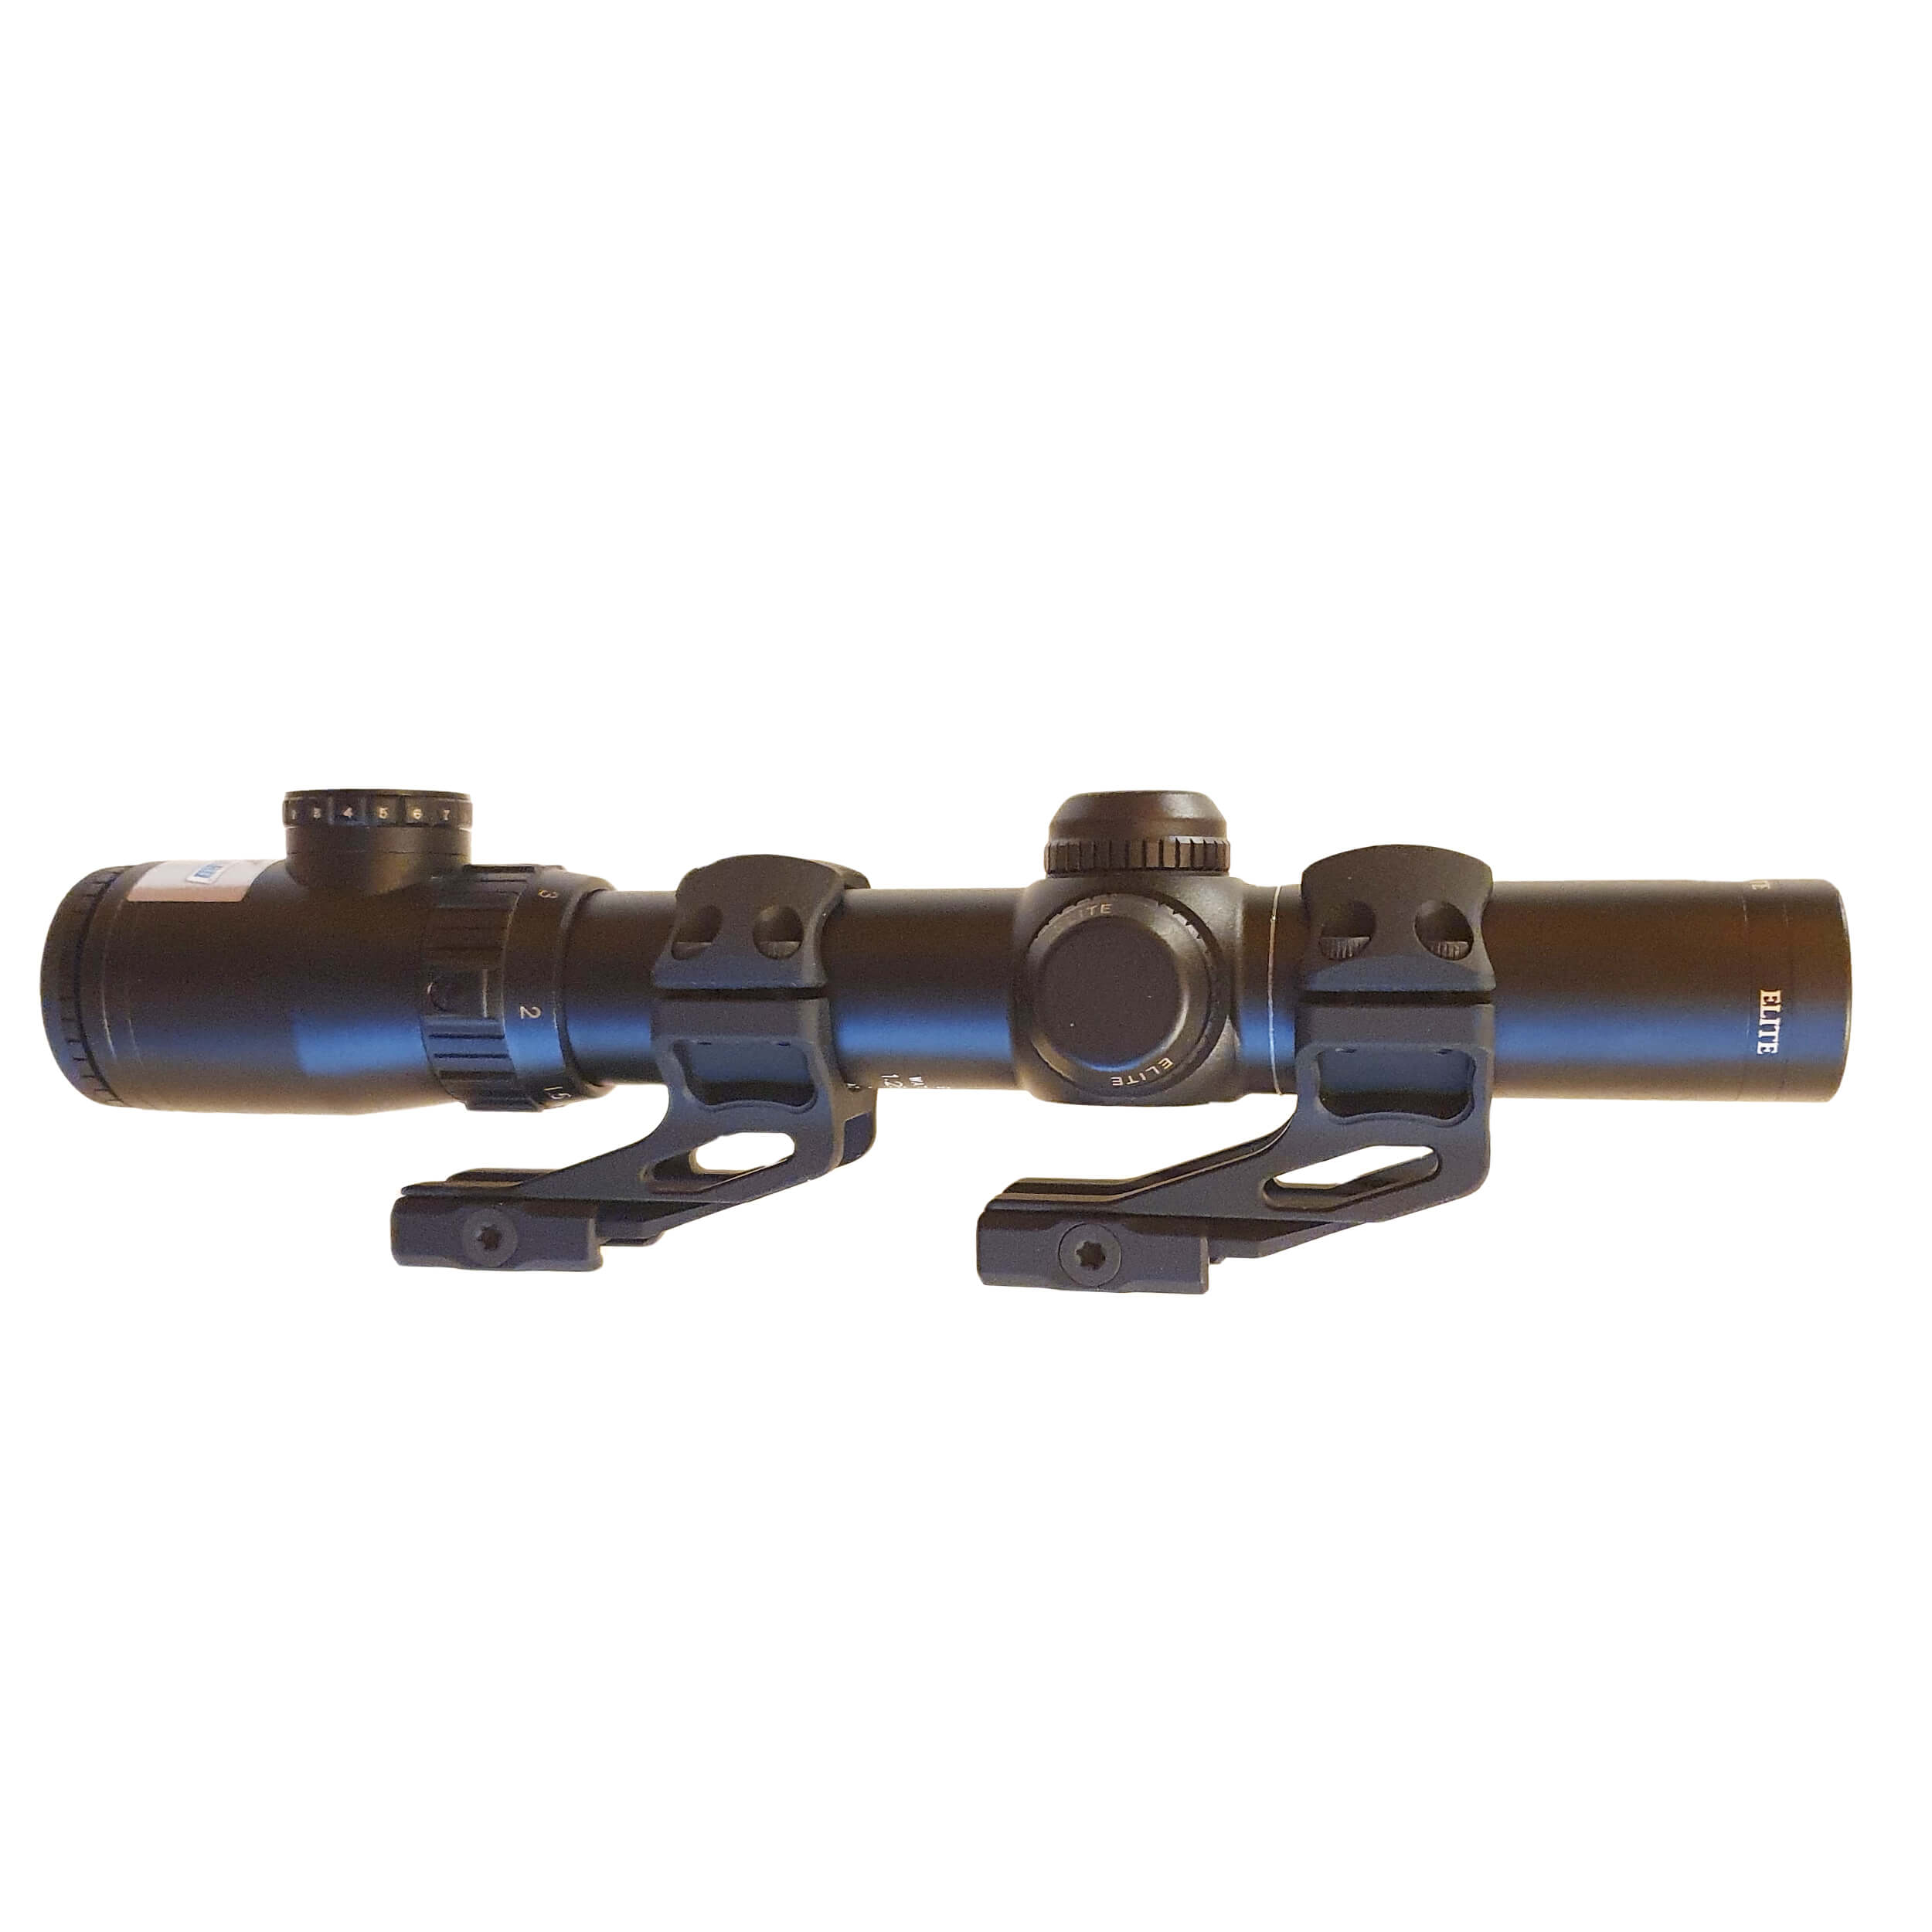 Bushnell - Riflescope Elite M 1.25-4x24, 4A,incl. UTG assembly